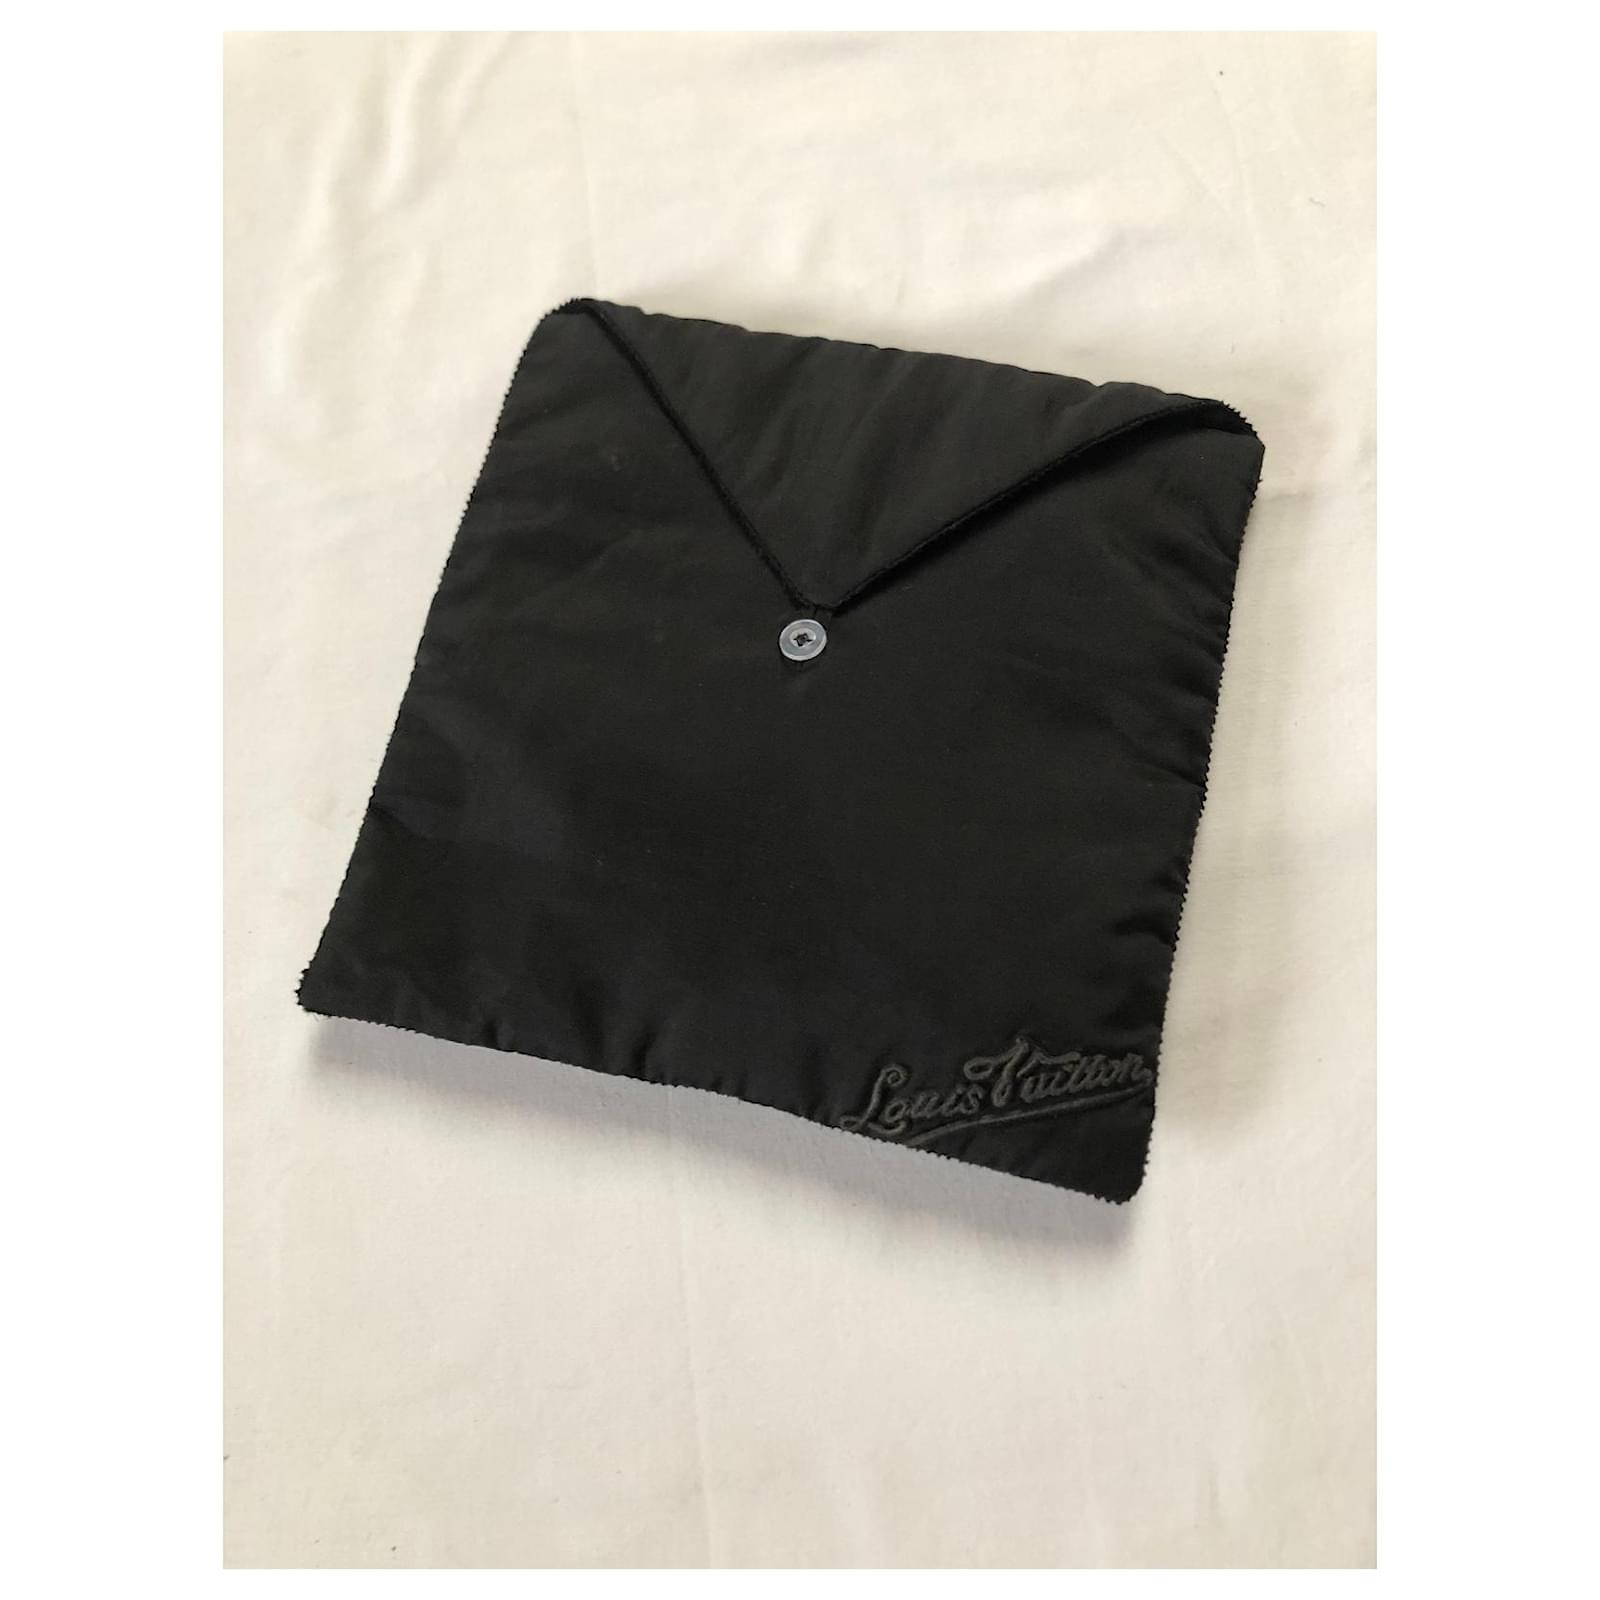 Louis Vuitton black silk bermuda shorts with LV pattern lace trims